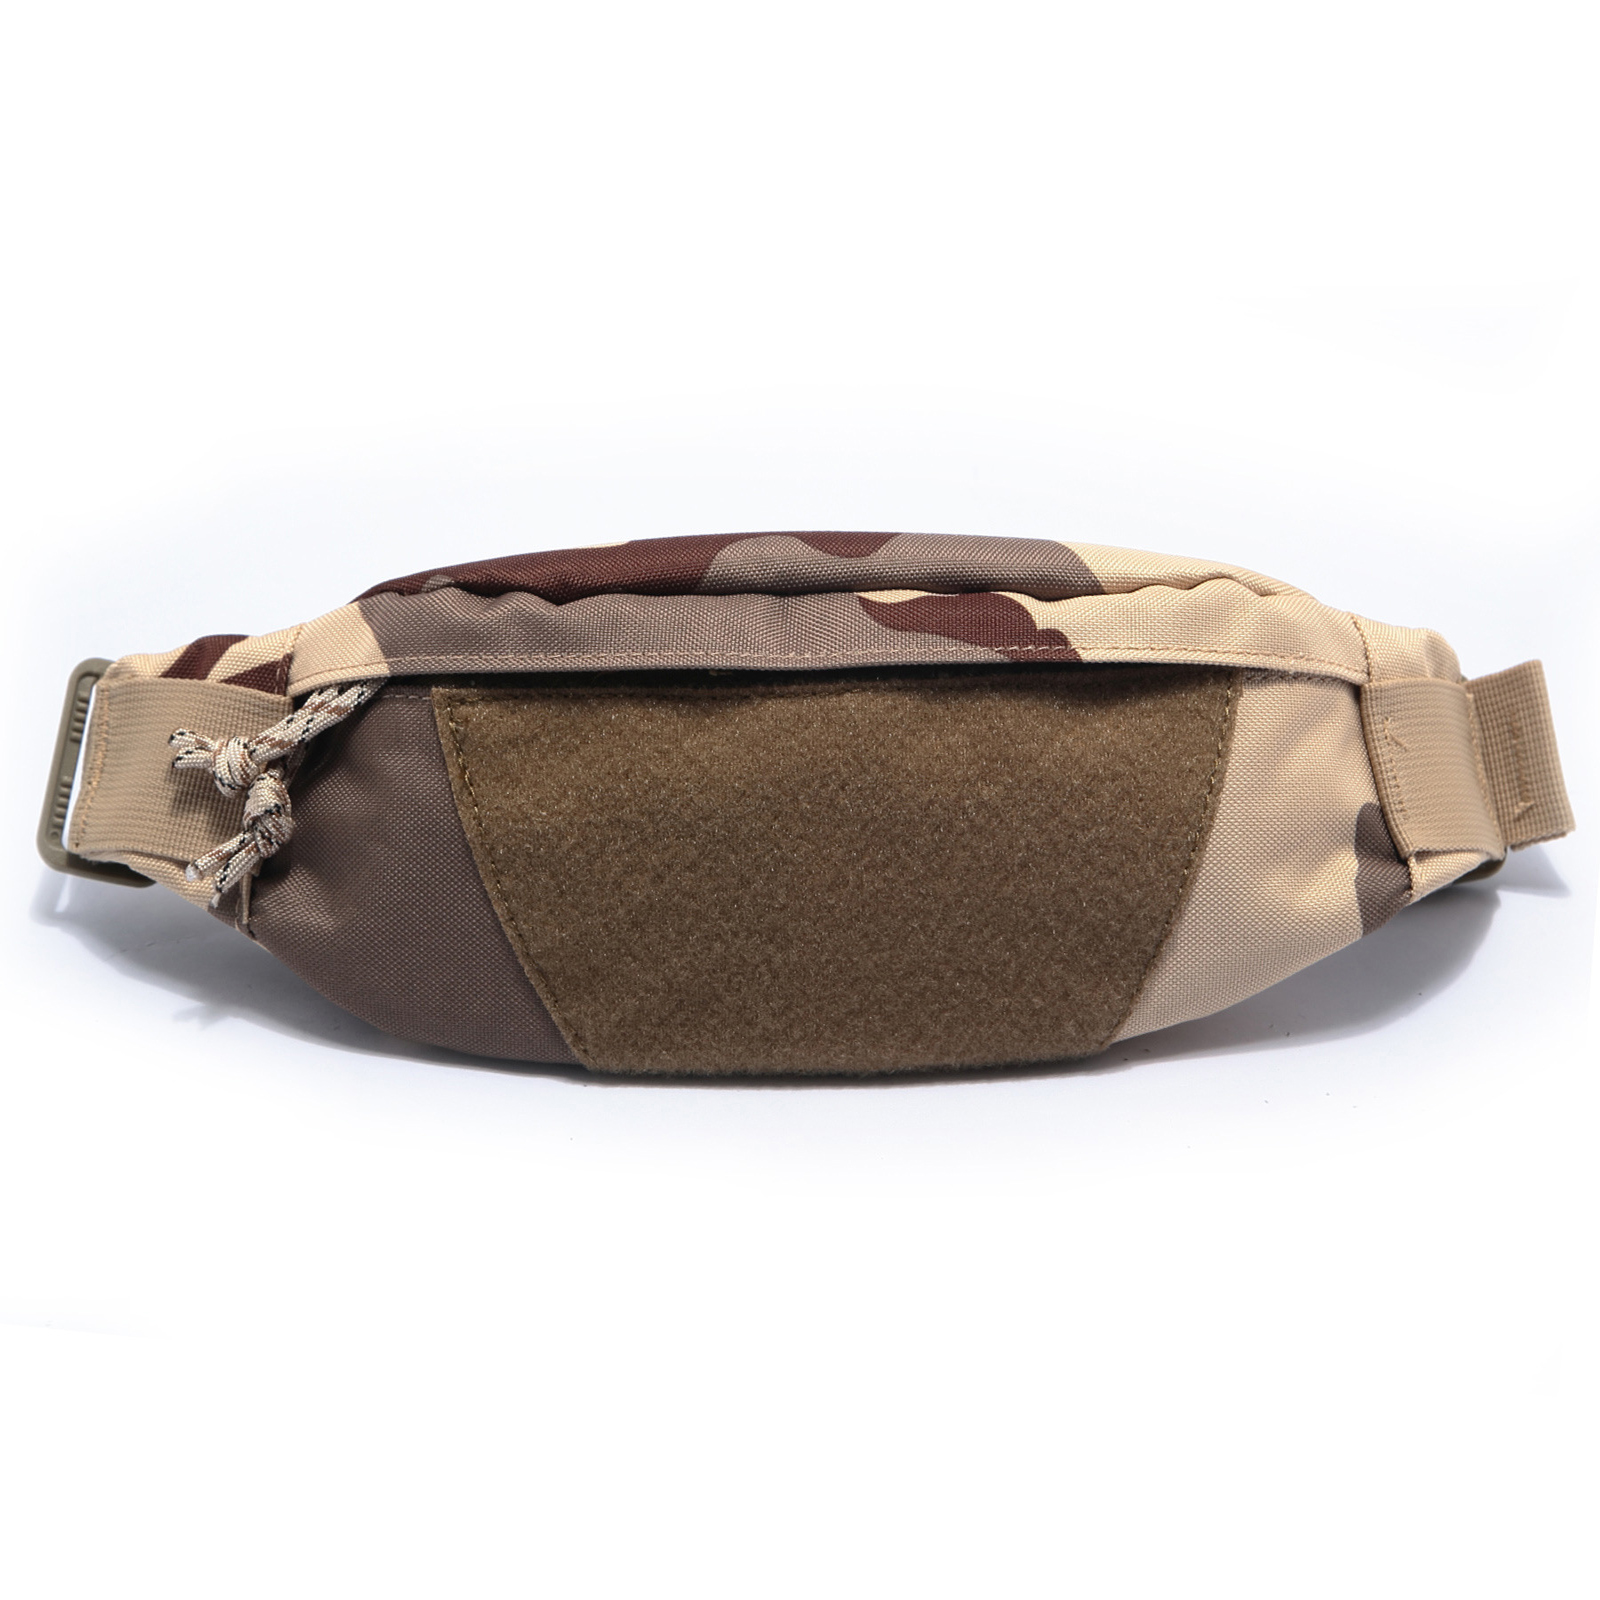 Camouflage-Tactical-Waist-Bag-Cross-Bag-Tactical-Waist-Bag-Outdoor-Fitness-Leisure-Bag-1568909-7